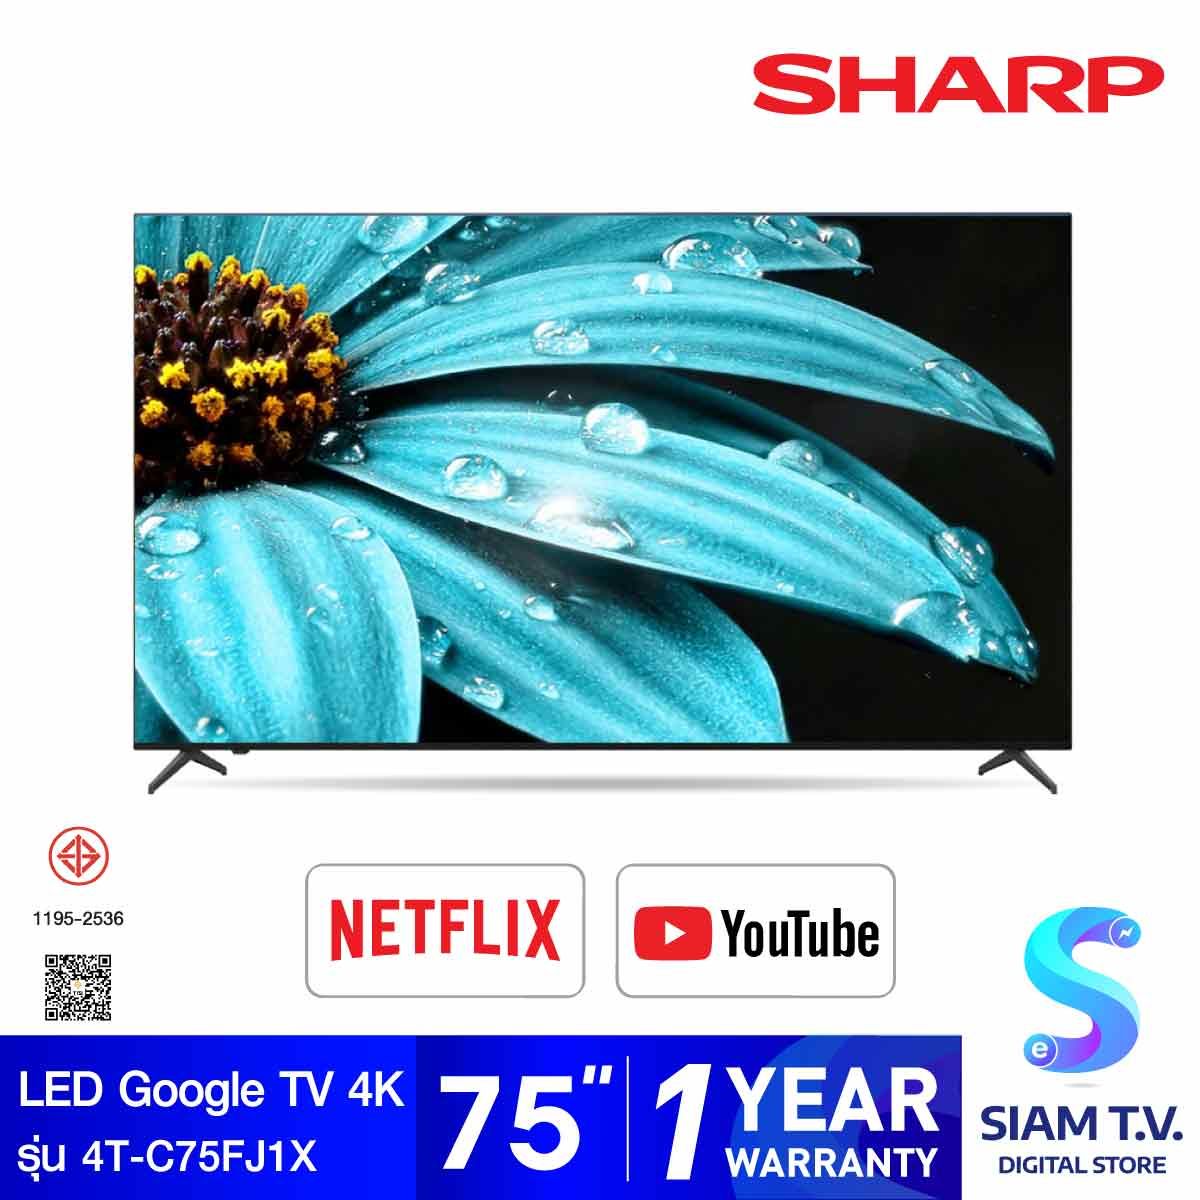 SHARP Google TV AQUOS 4K รุ่น C75FJ1X สมาร์ททีวีขนาด 75 นิ้ว